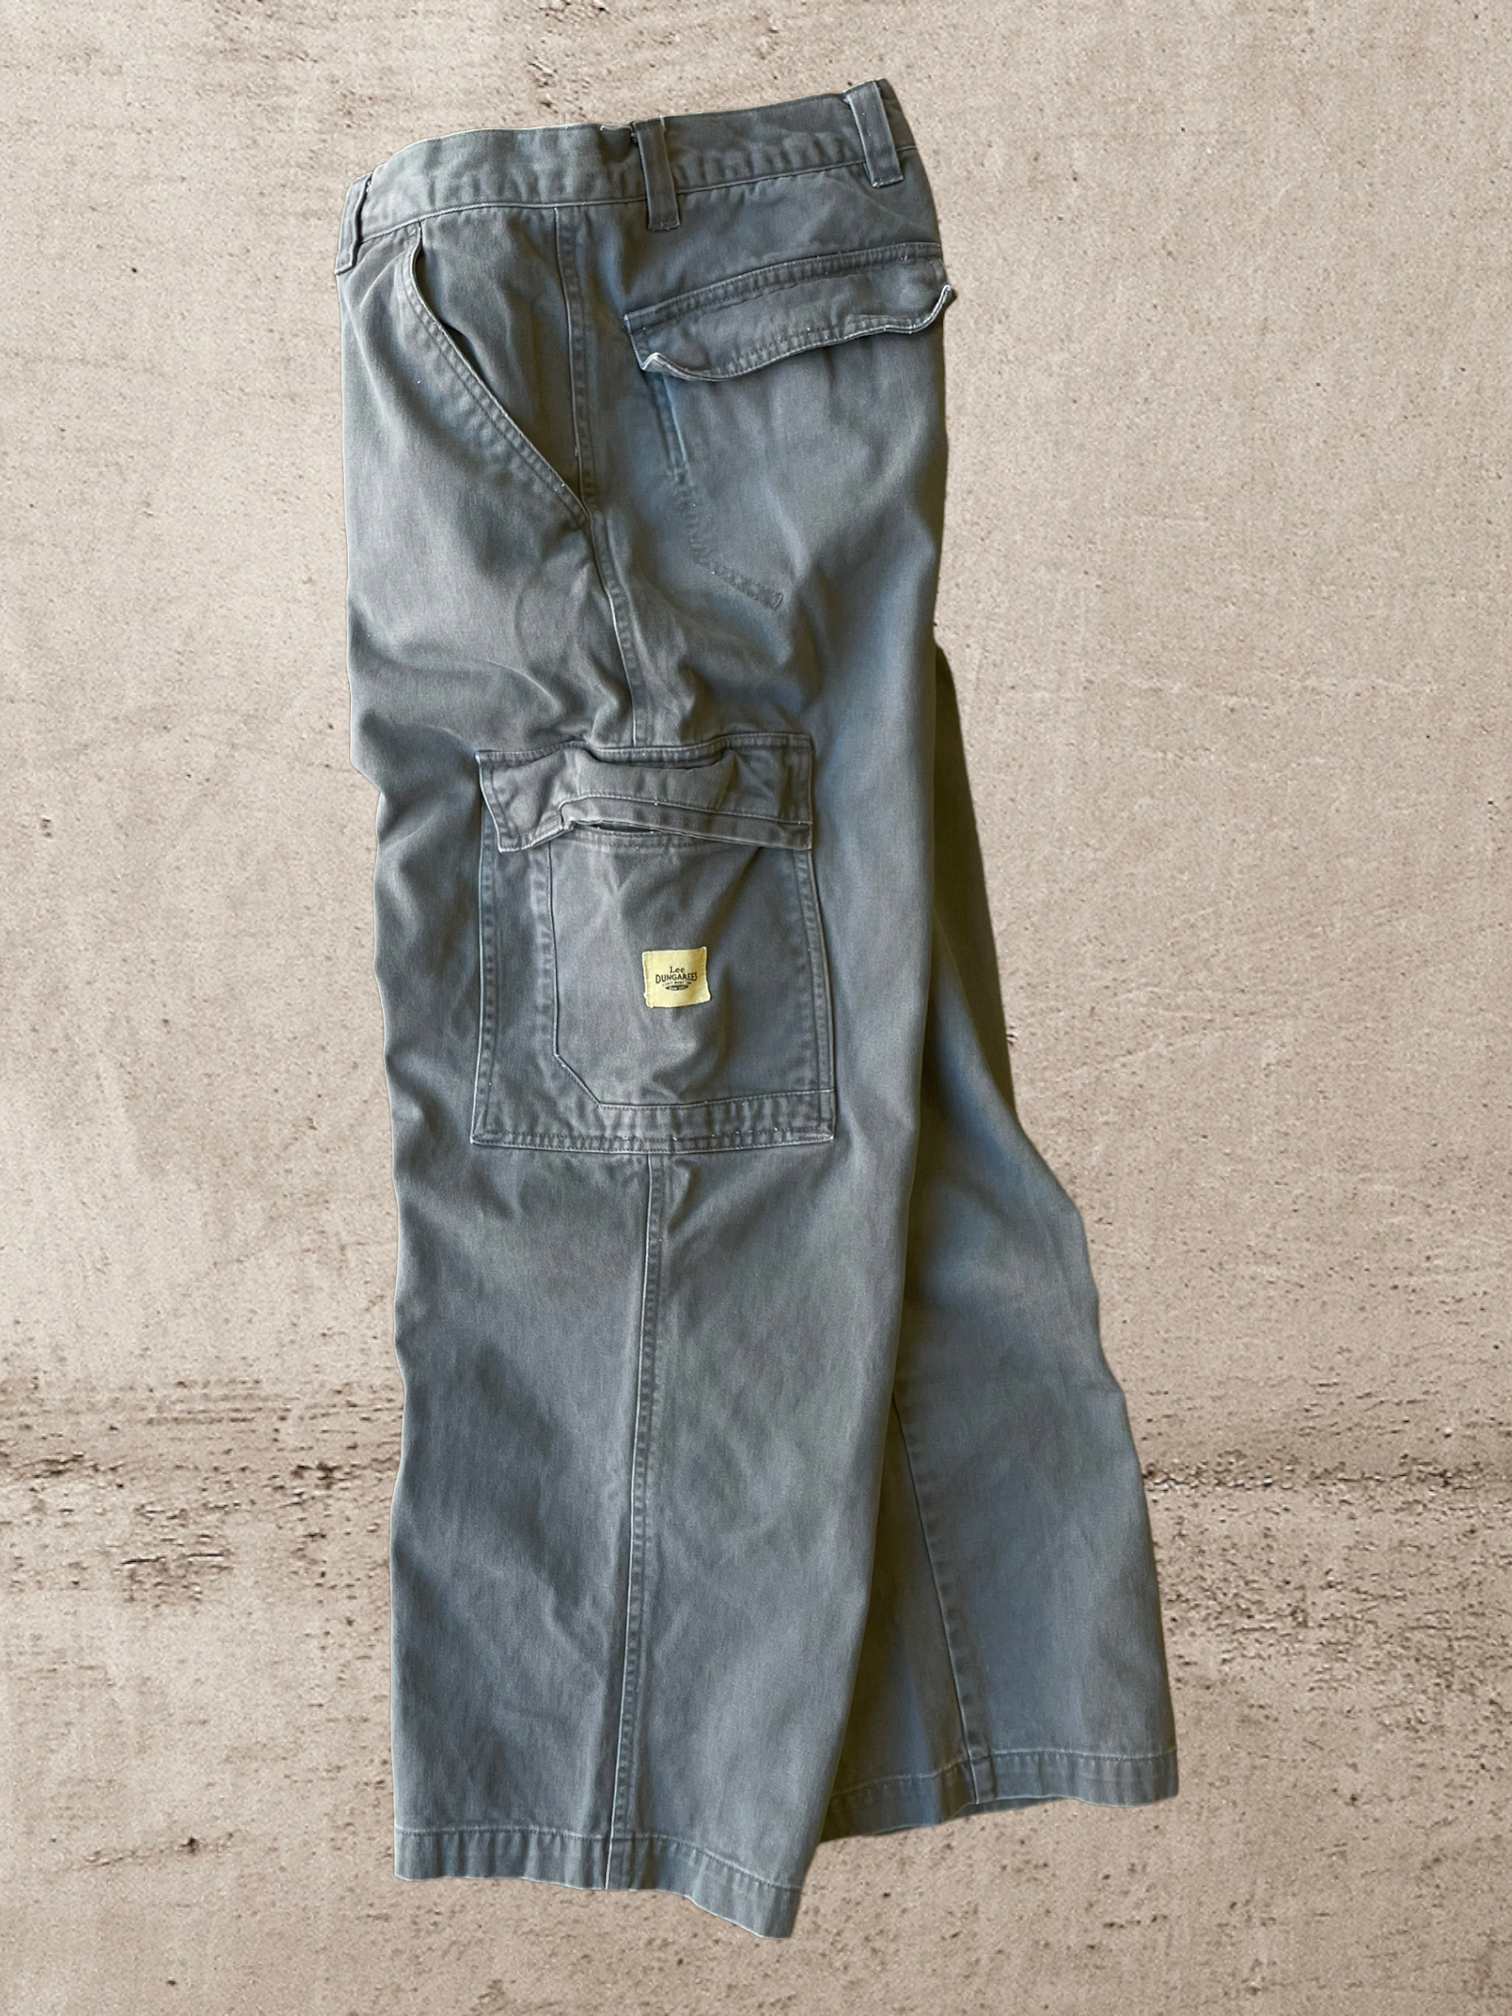 Vintage Lee Dungarees Cargo Pants - 32x30